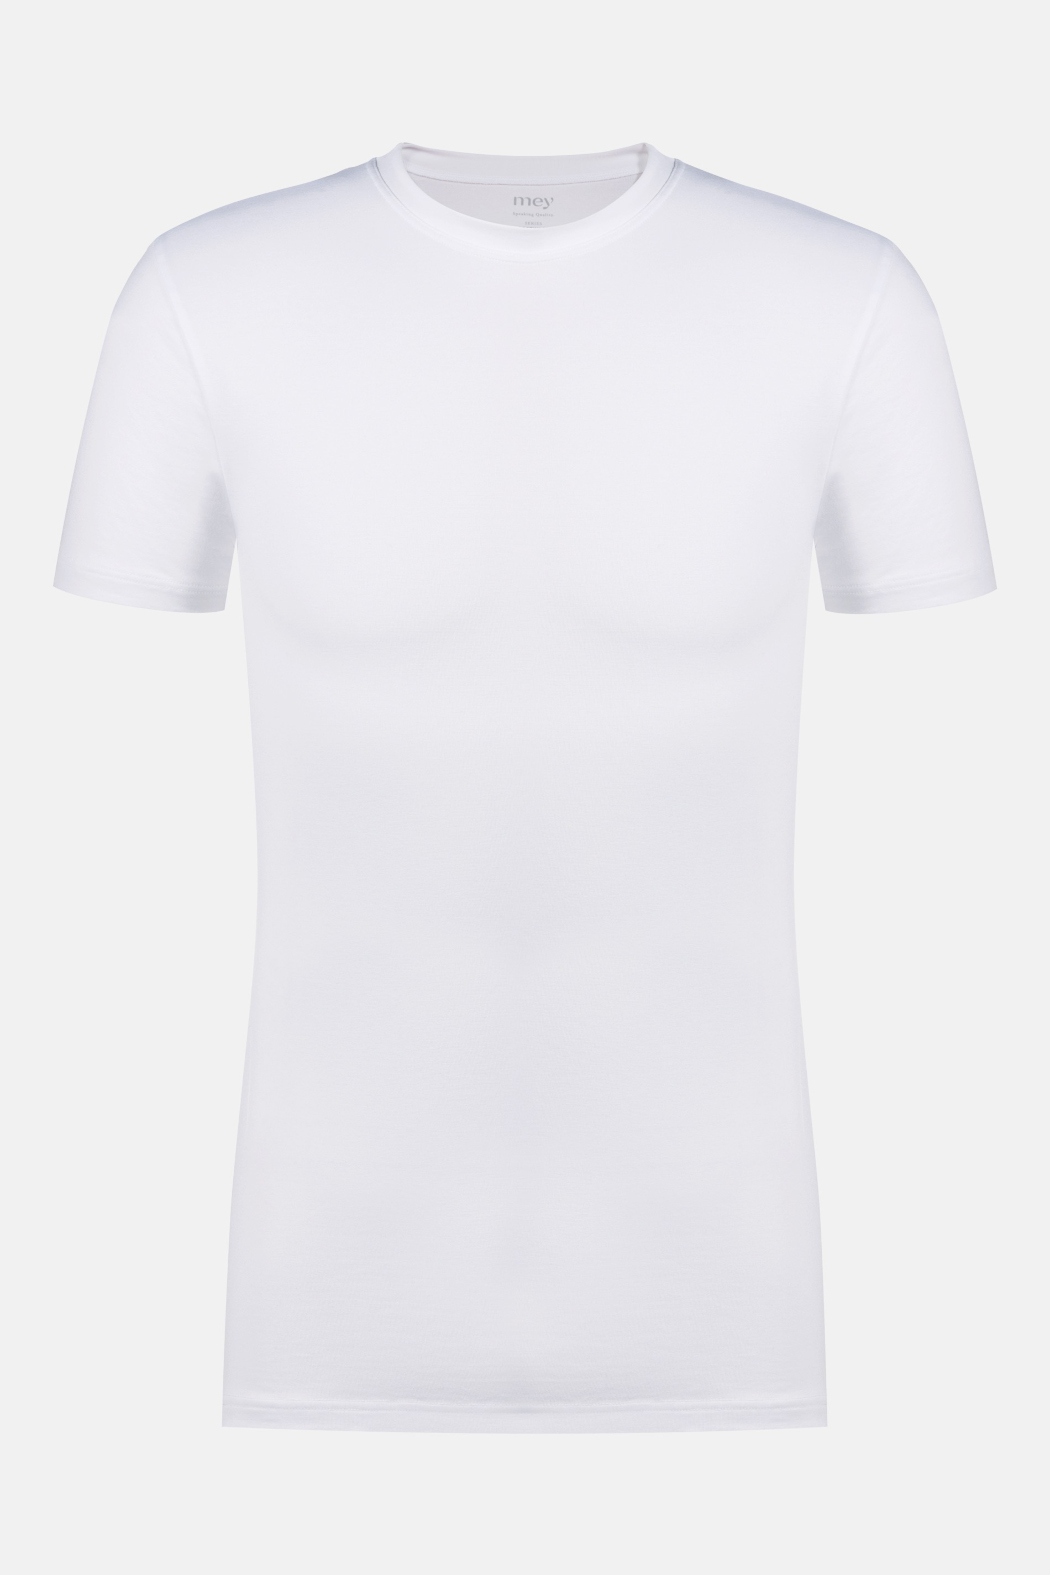 Mey Serie Software Herren Olympia-Shirt